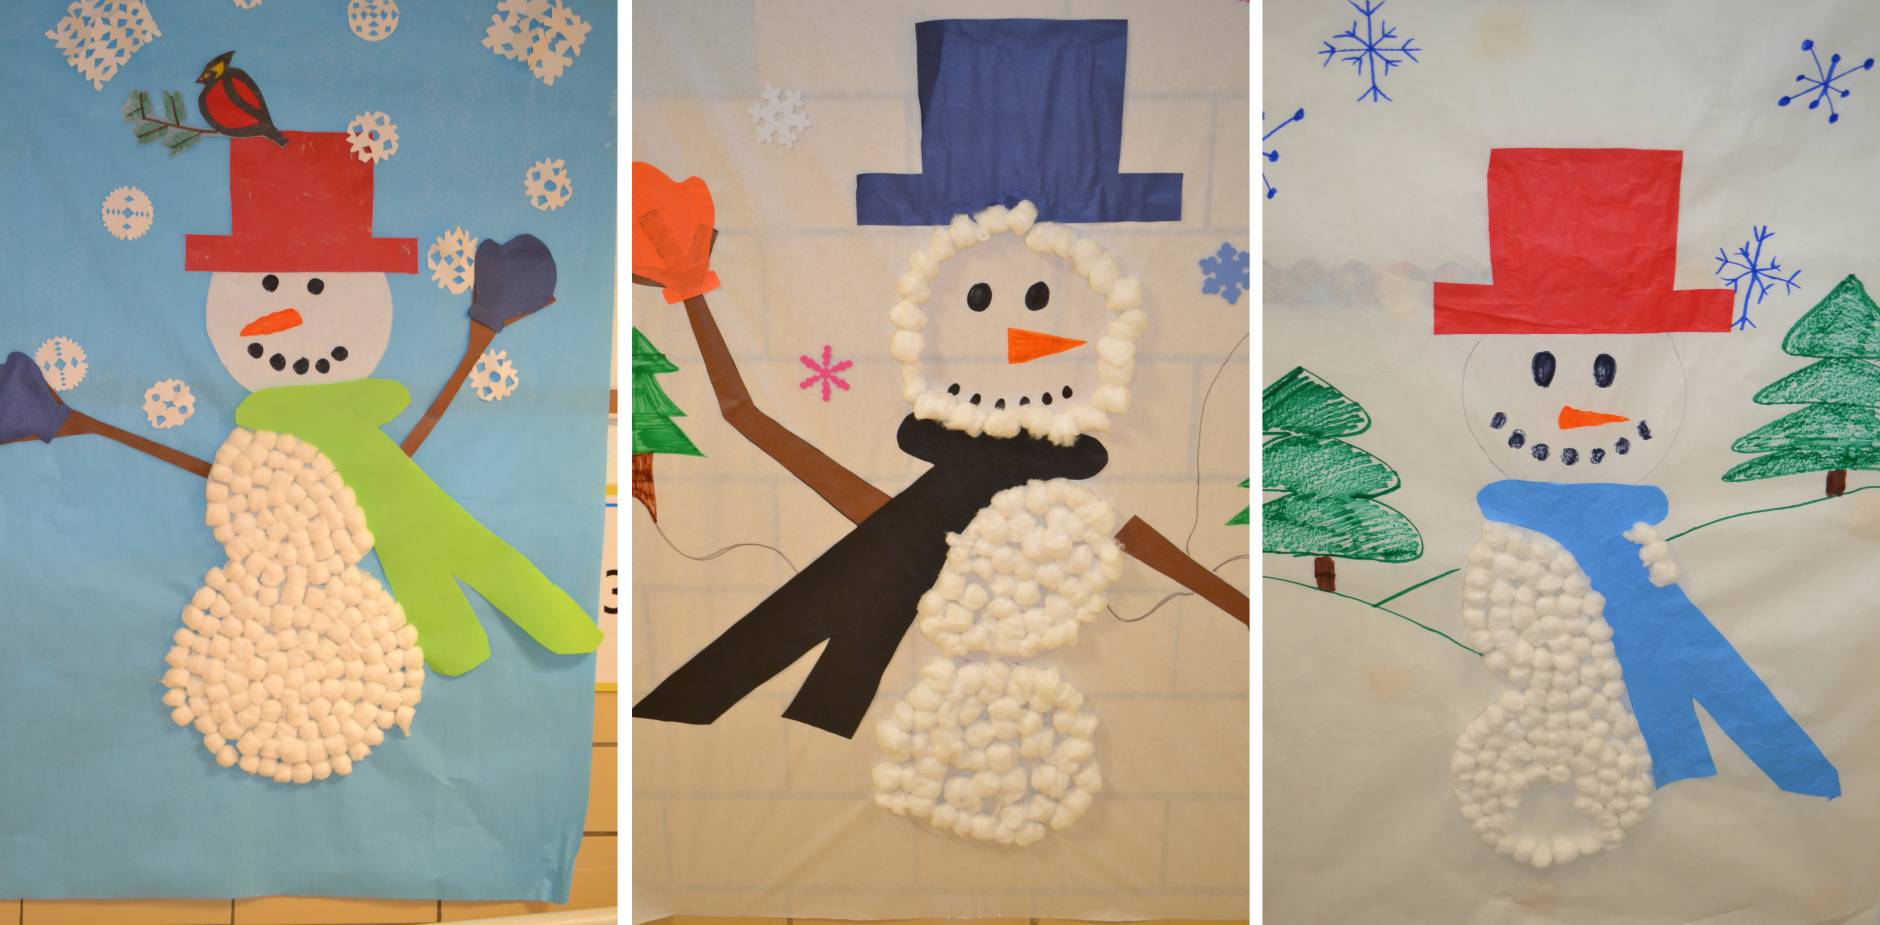 Students at Farmington Elementary School in Culpeper, Virginia decorated these snowmen for their classroom. (Courtesy Karen Dugger)